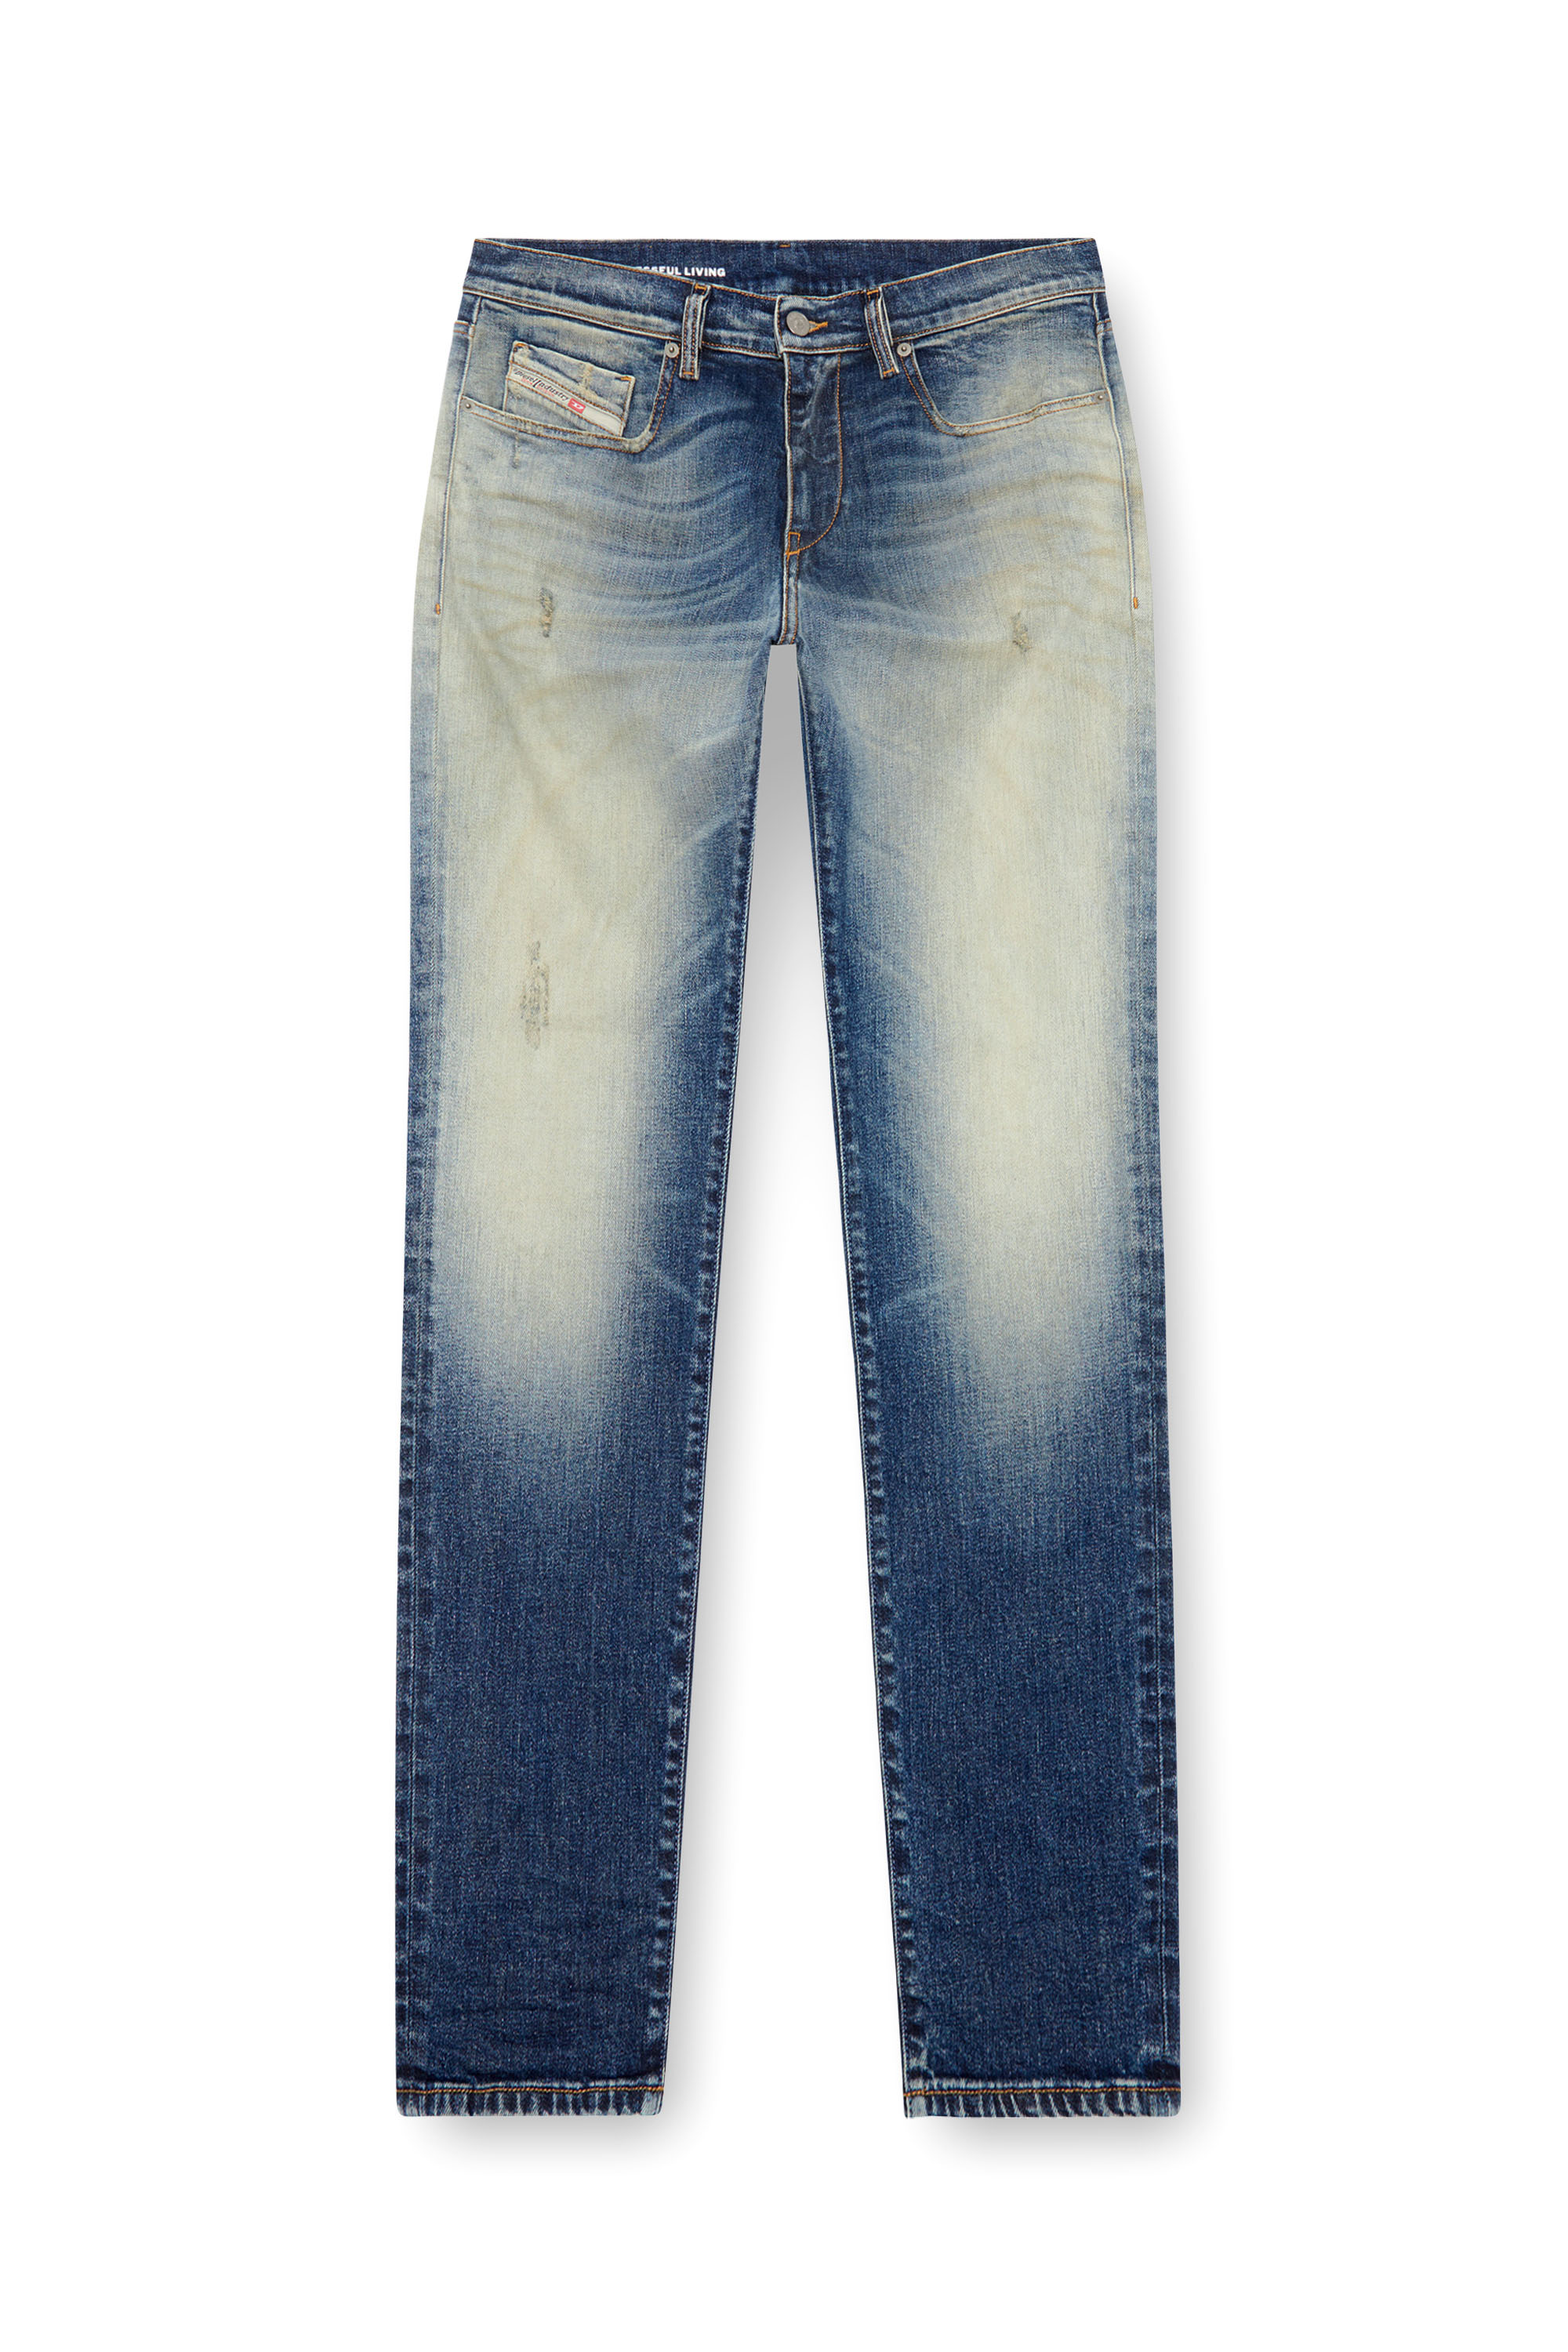 Diesel - Slim Jeans 2019 D-Strukt 09J64, Hombre Slim Jeans - 2019 D-Strukt in Azul marino - Image 3